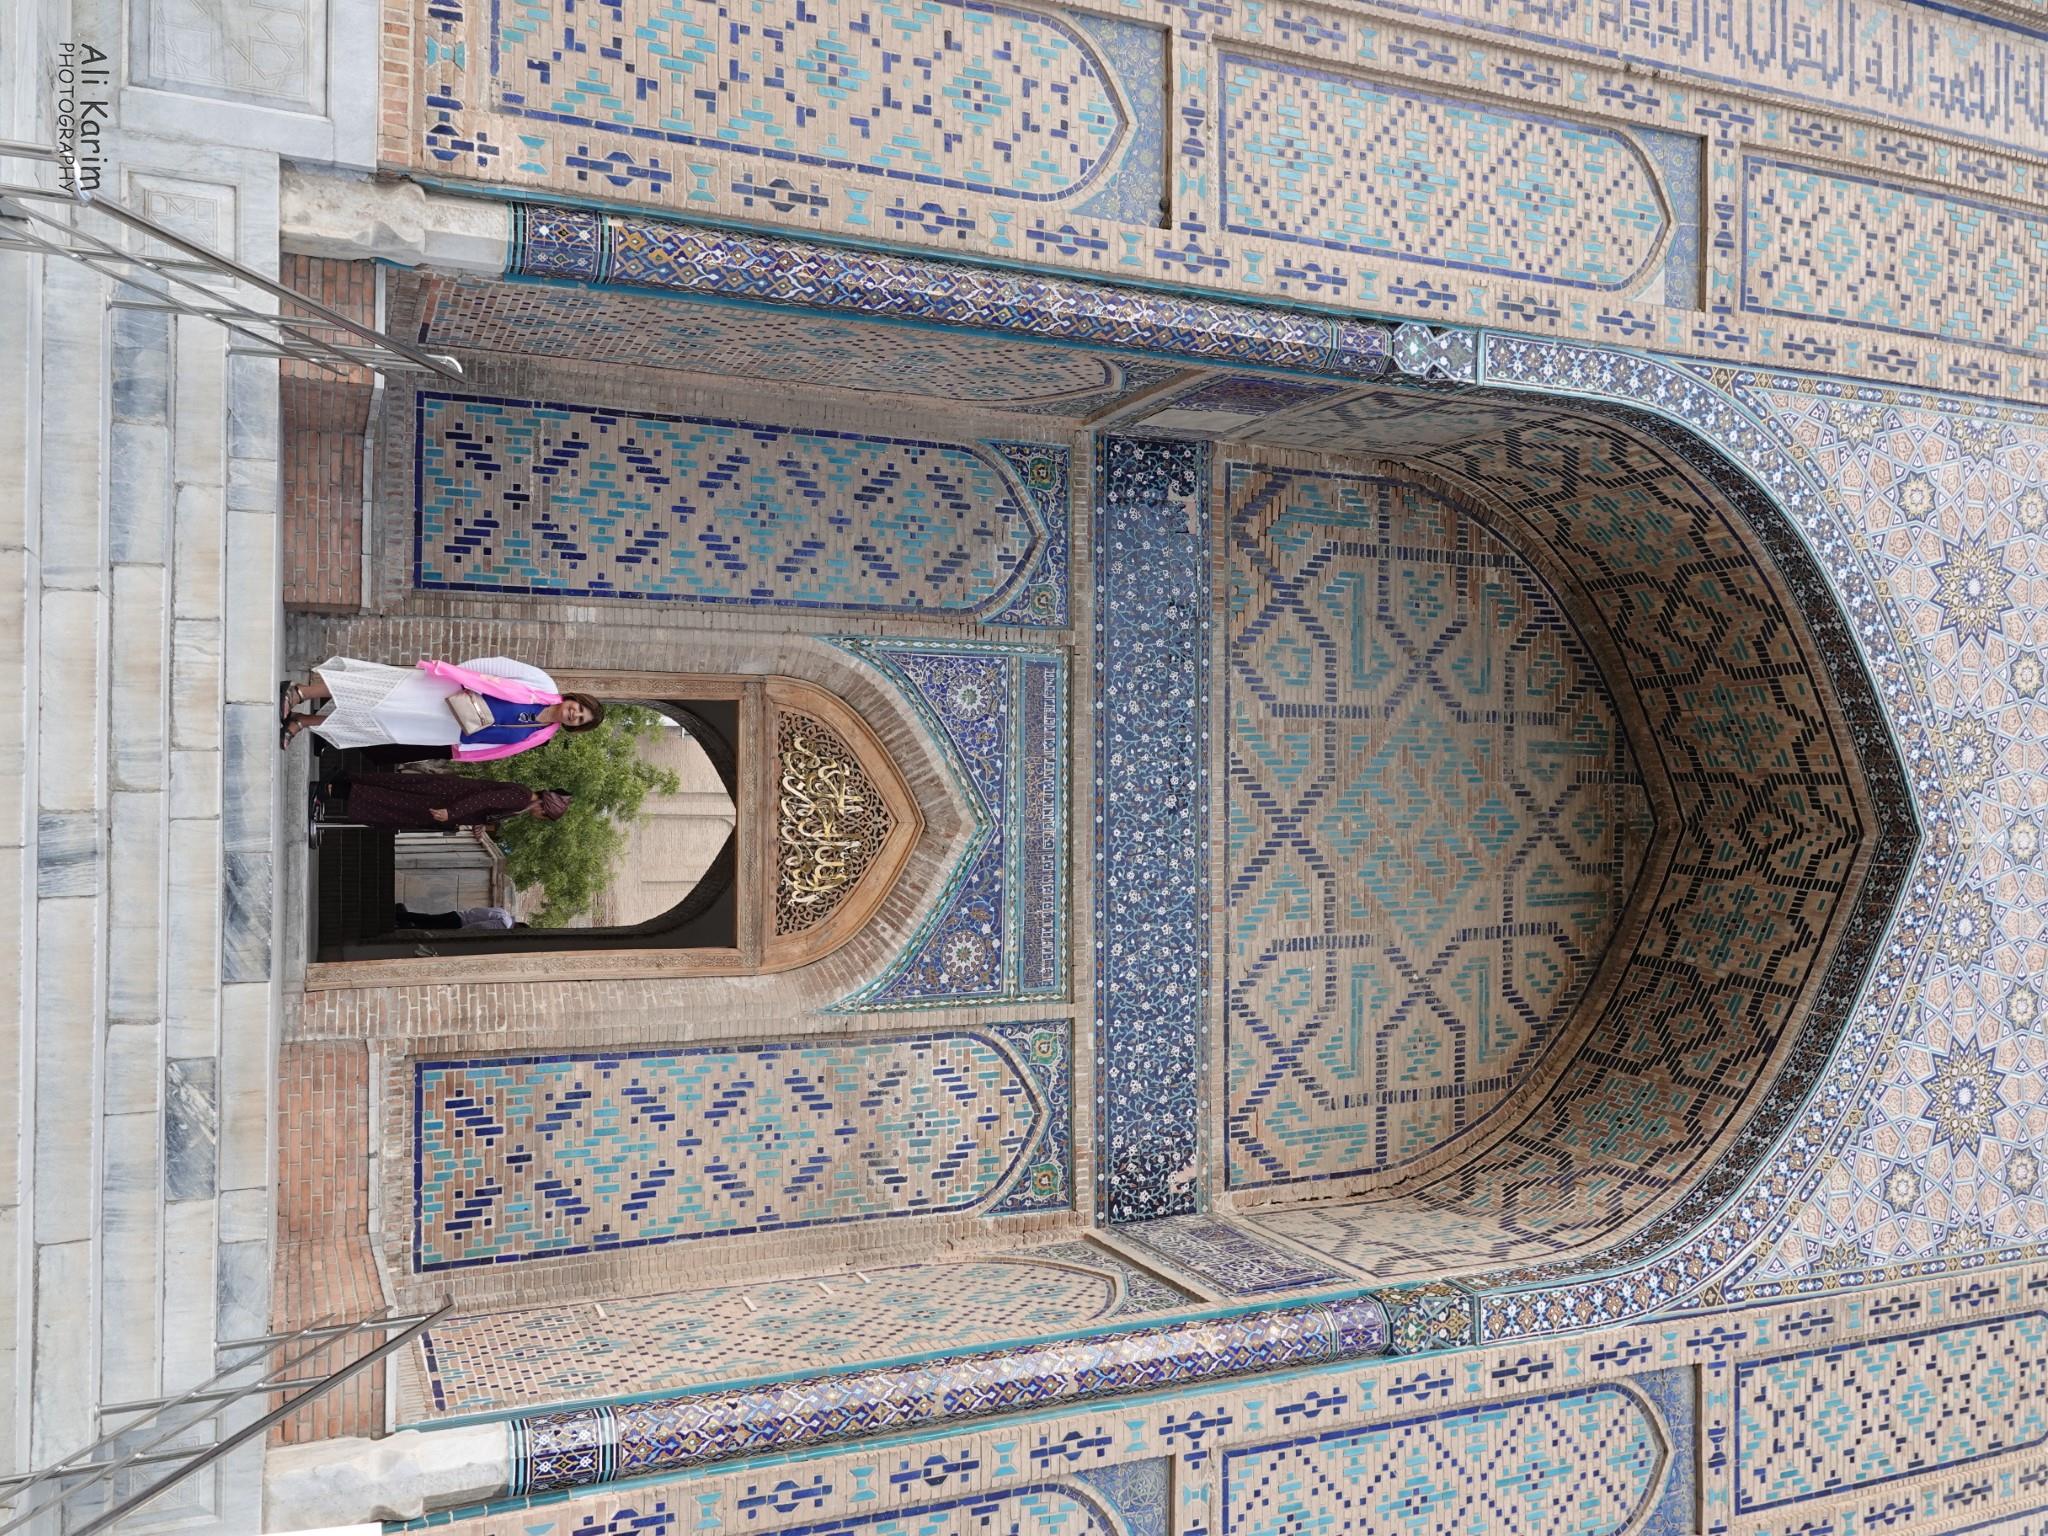 More Samarkand, Elaborate entrance to the Shah-i-zinda complex